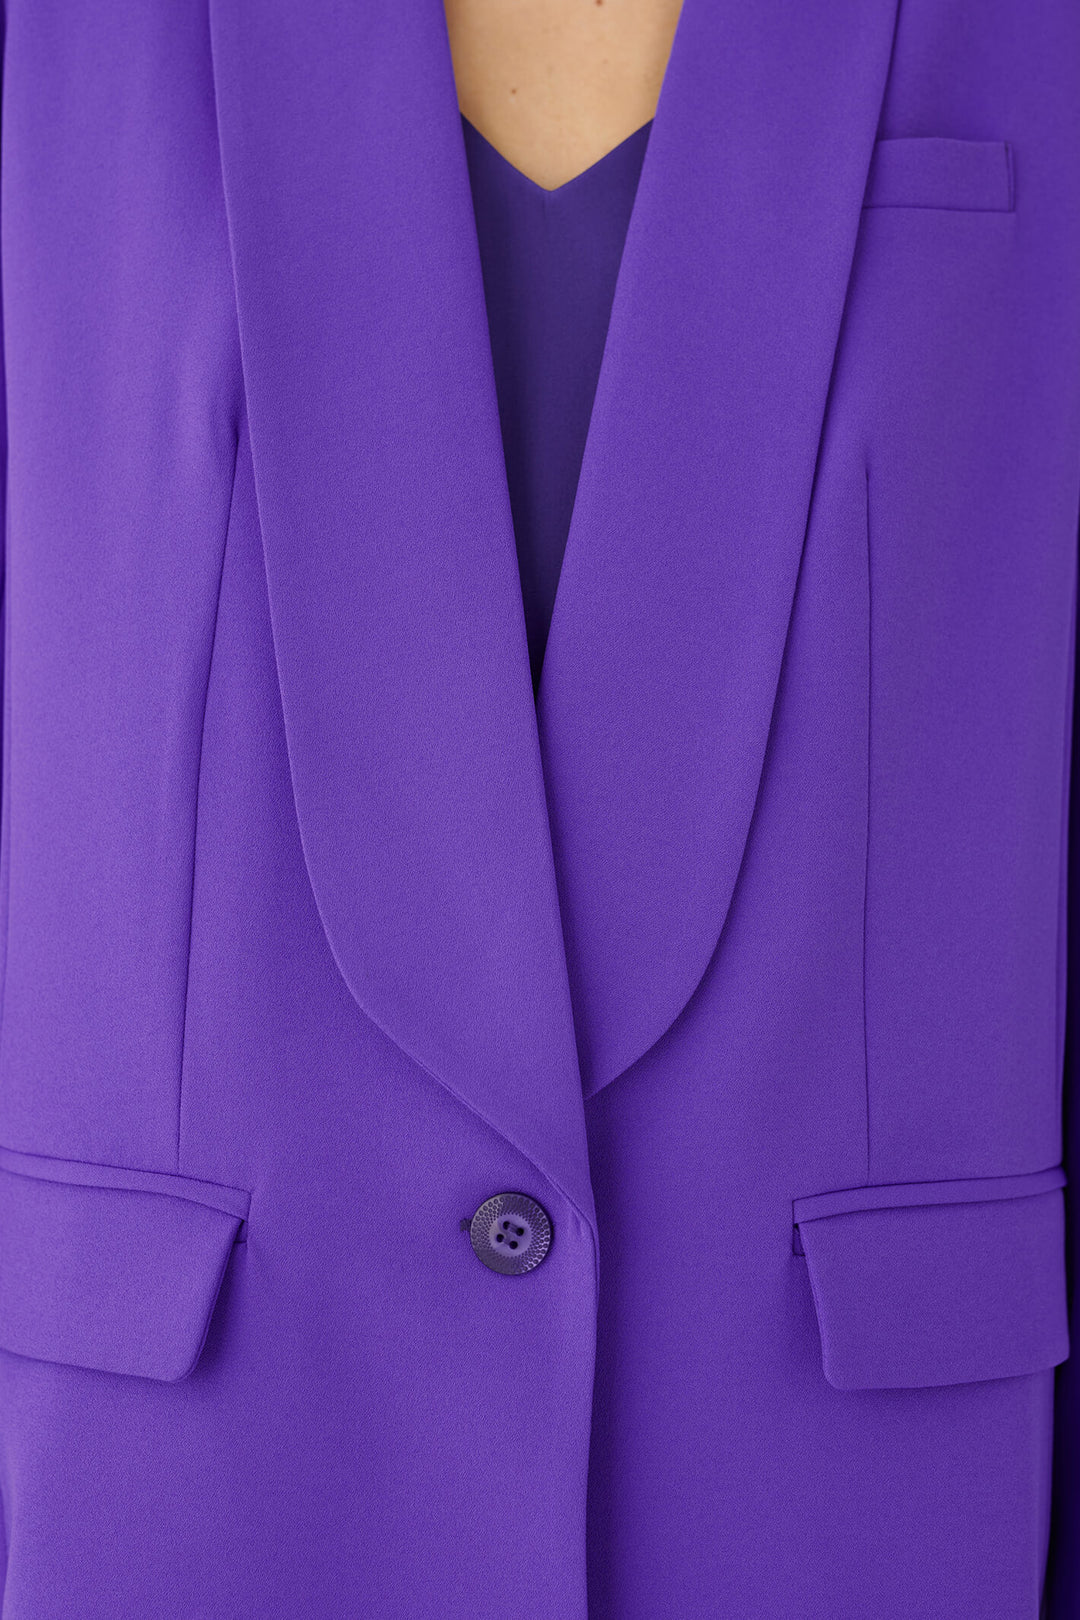 Dea Kudibal 0820723 Elinor Electric Purple Blazer Jacket